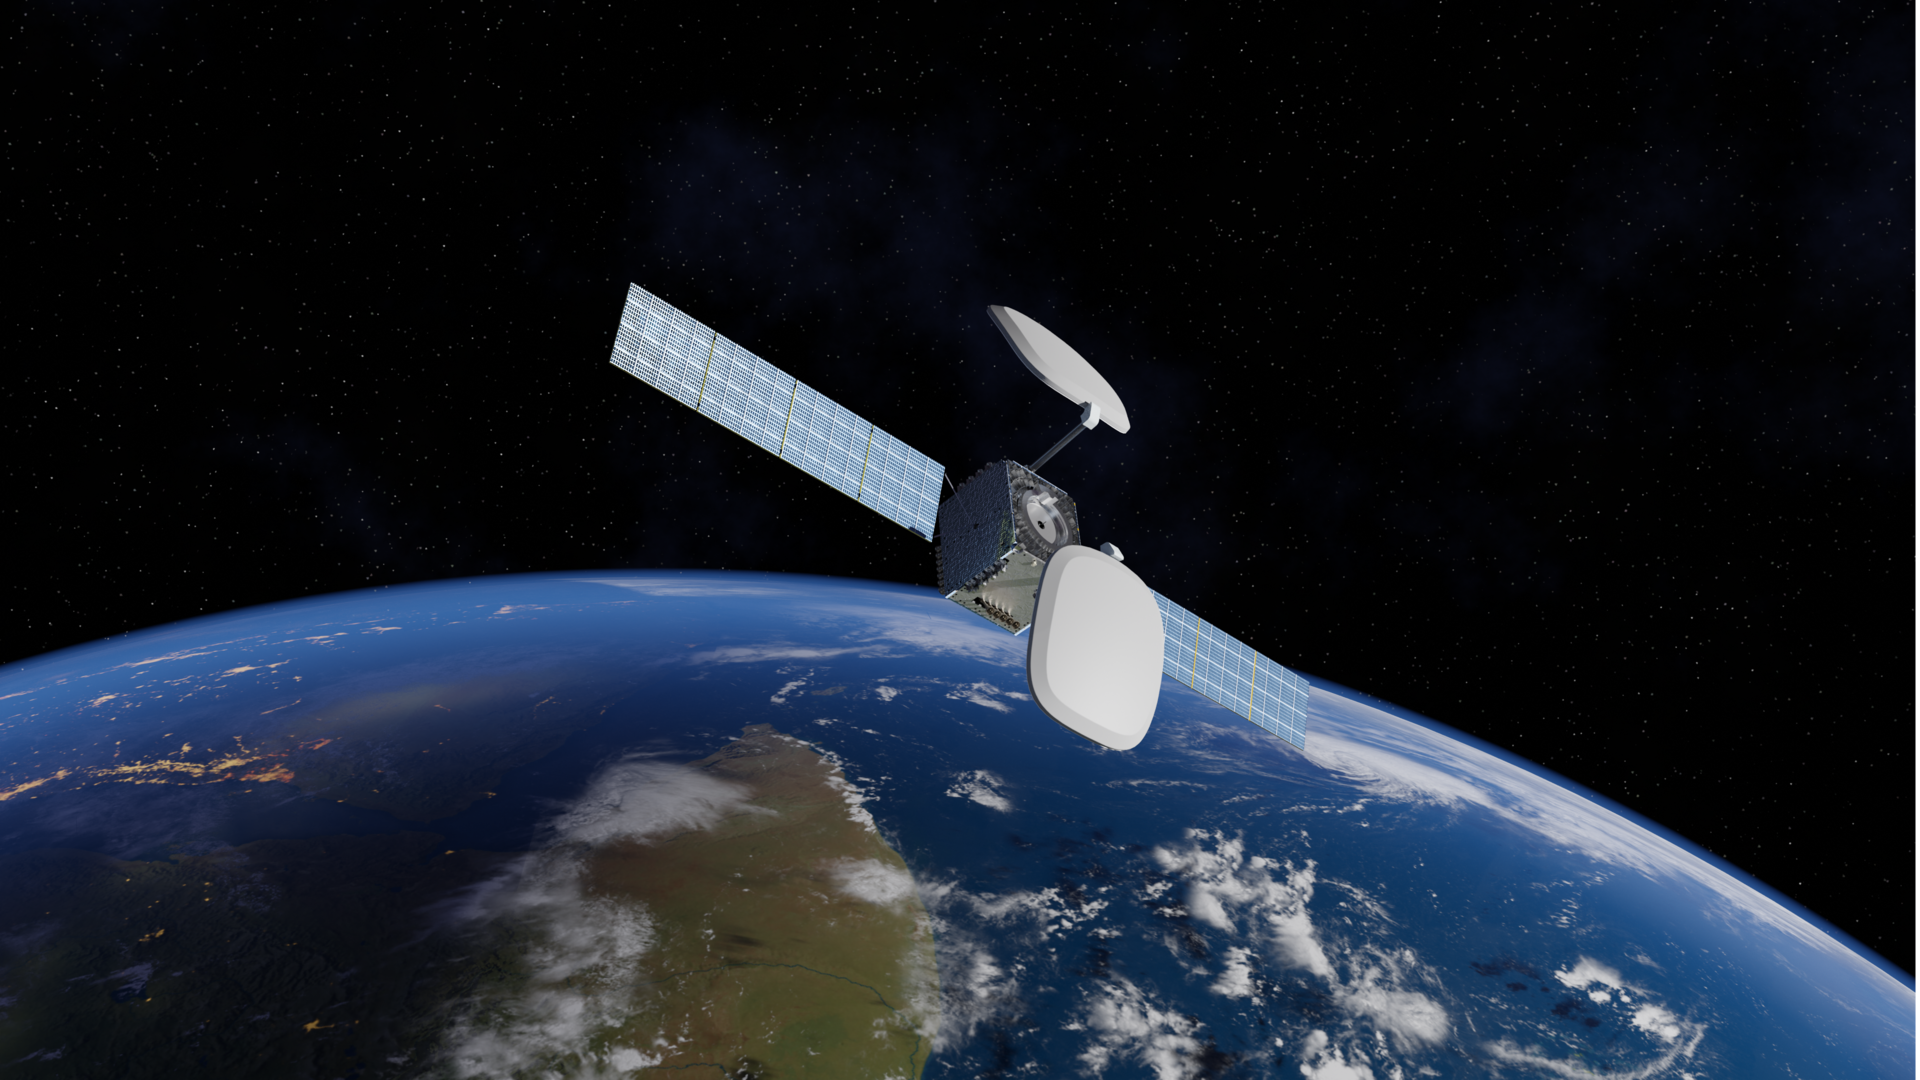 Agile micro-geostationary satellite